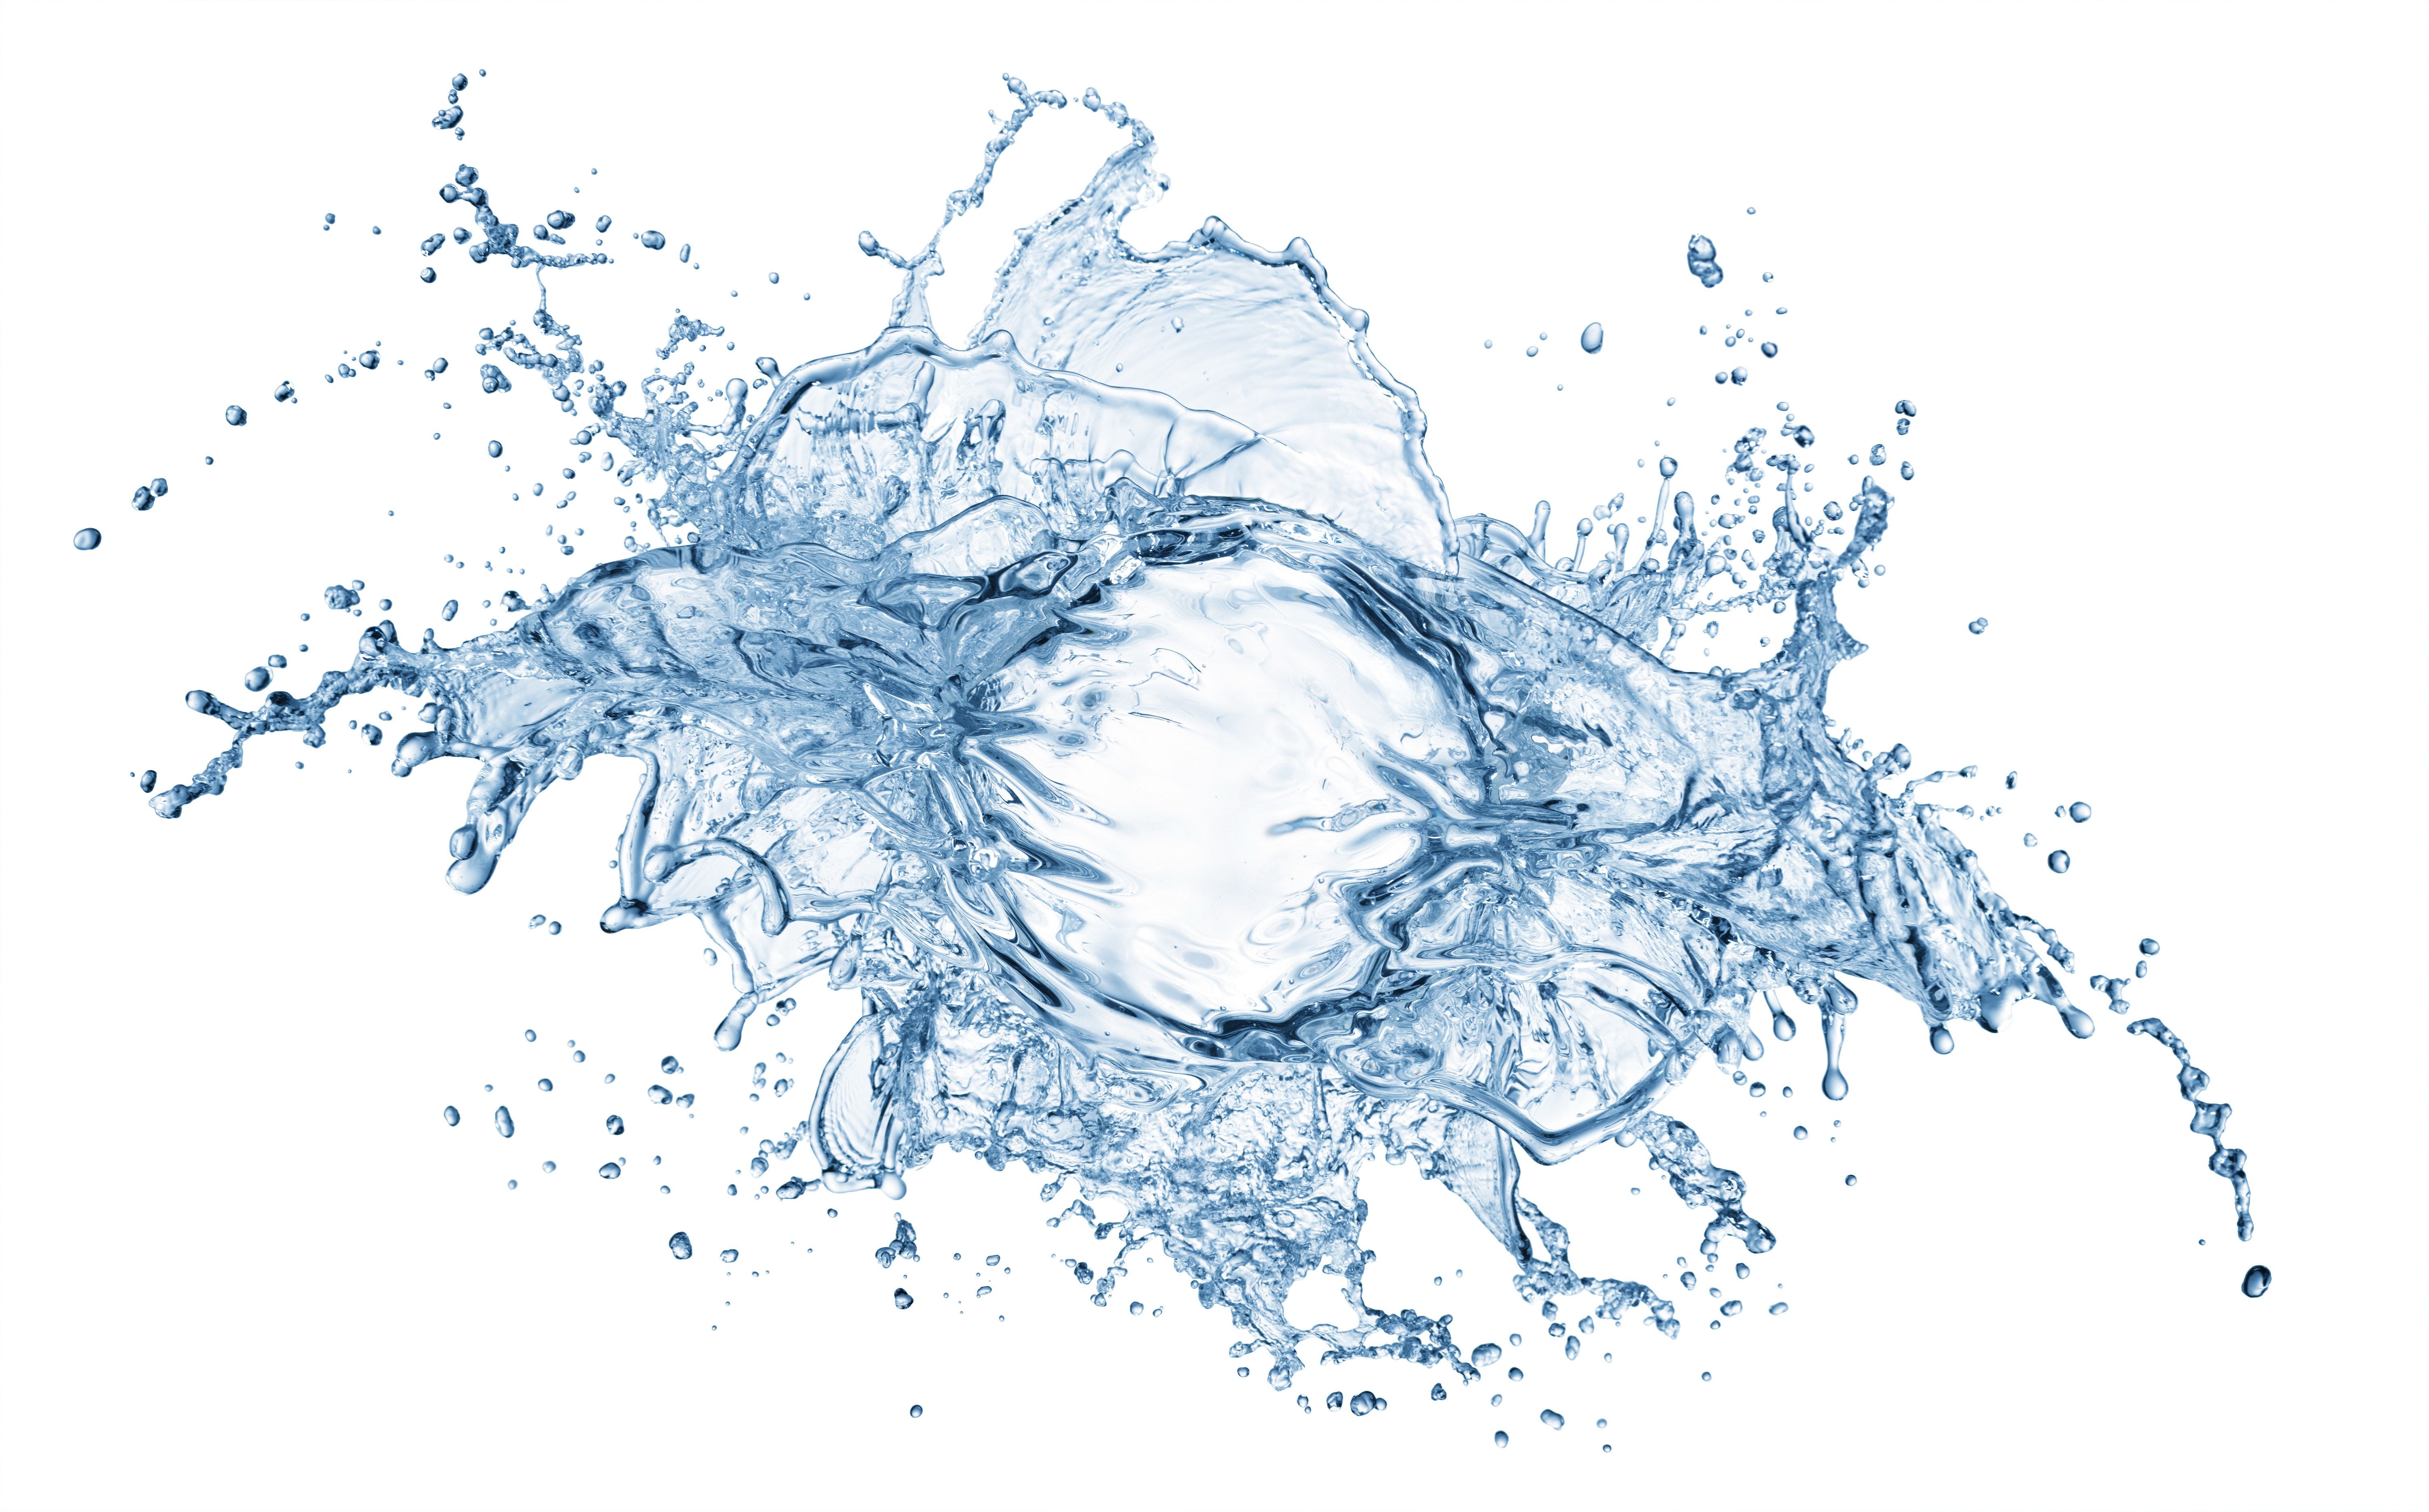 water splash texture particle - Google Search | vfx | Pinterest ...